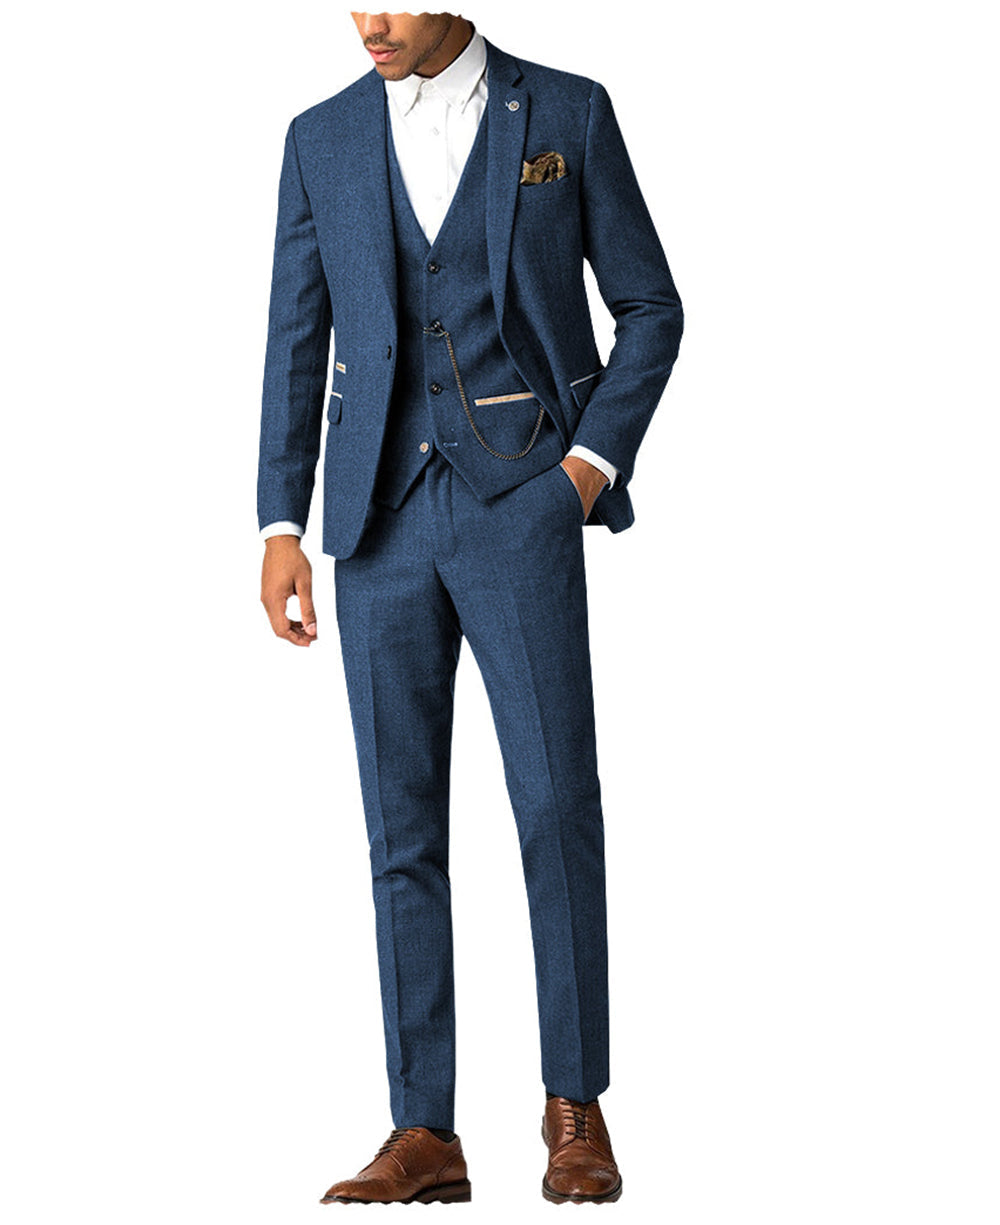 aesido Flat 3 Piece Men's Suit For Wedding(Blazer + Vest + Pants)